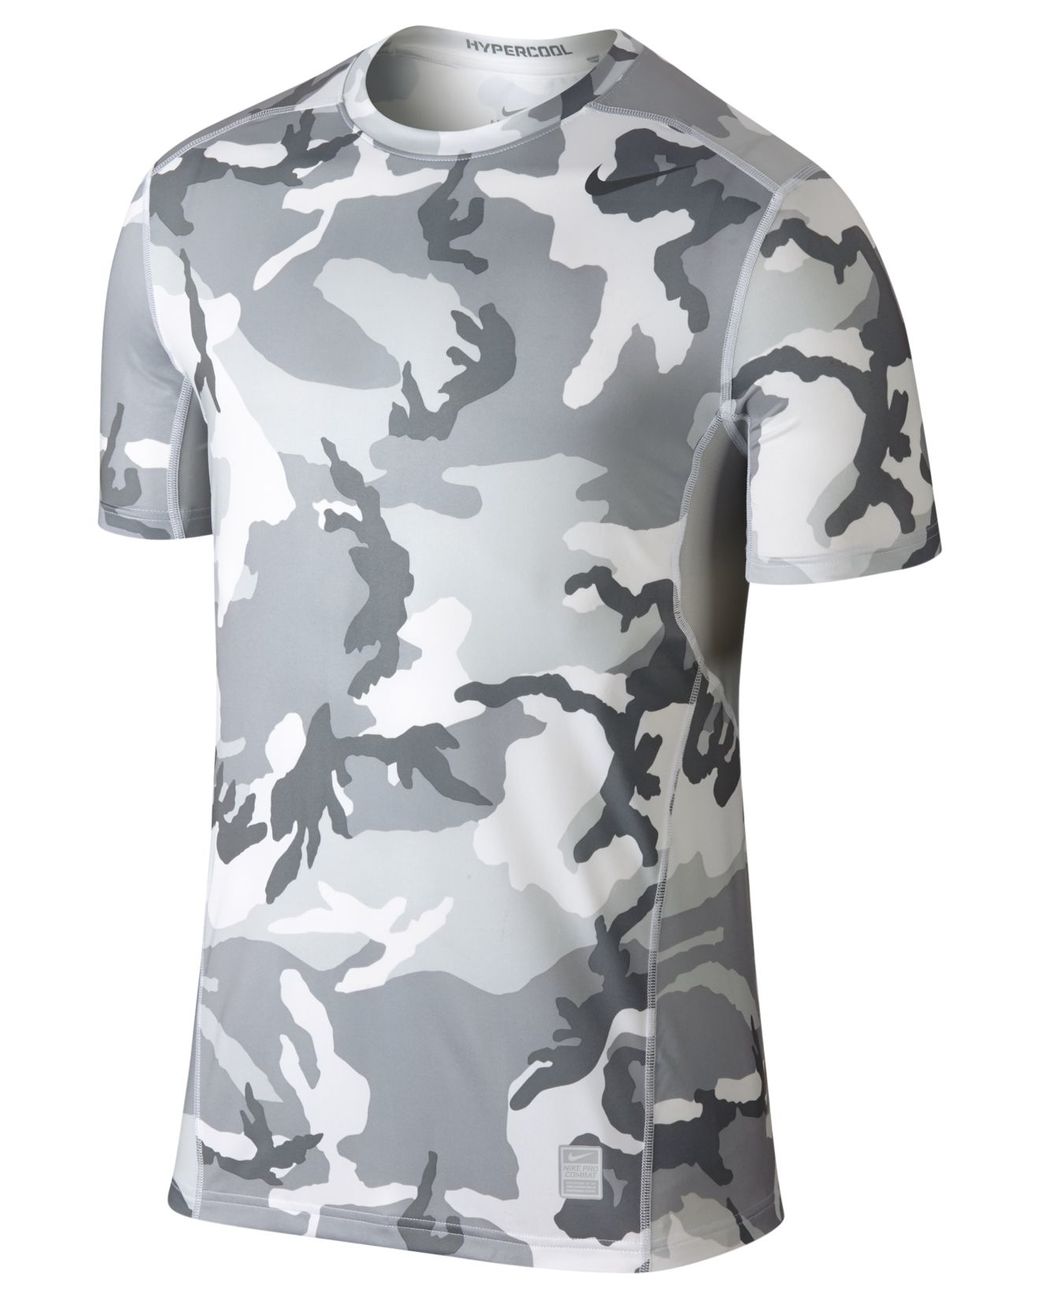 Nike Hypercool Dri-fit Camo T-shirt in Gray for Men | Lyst